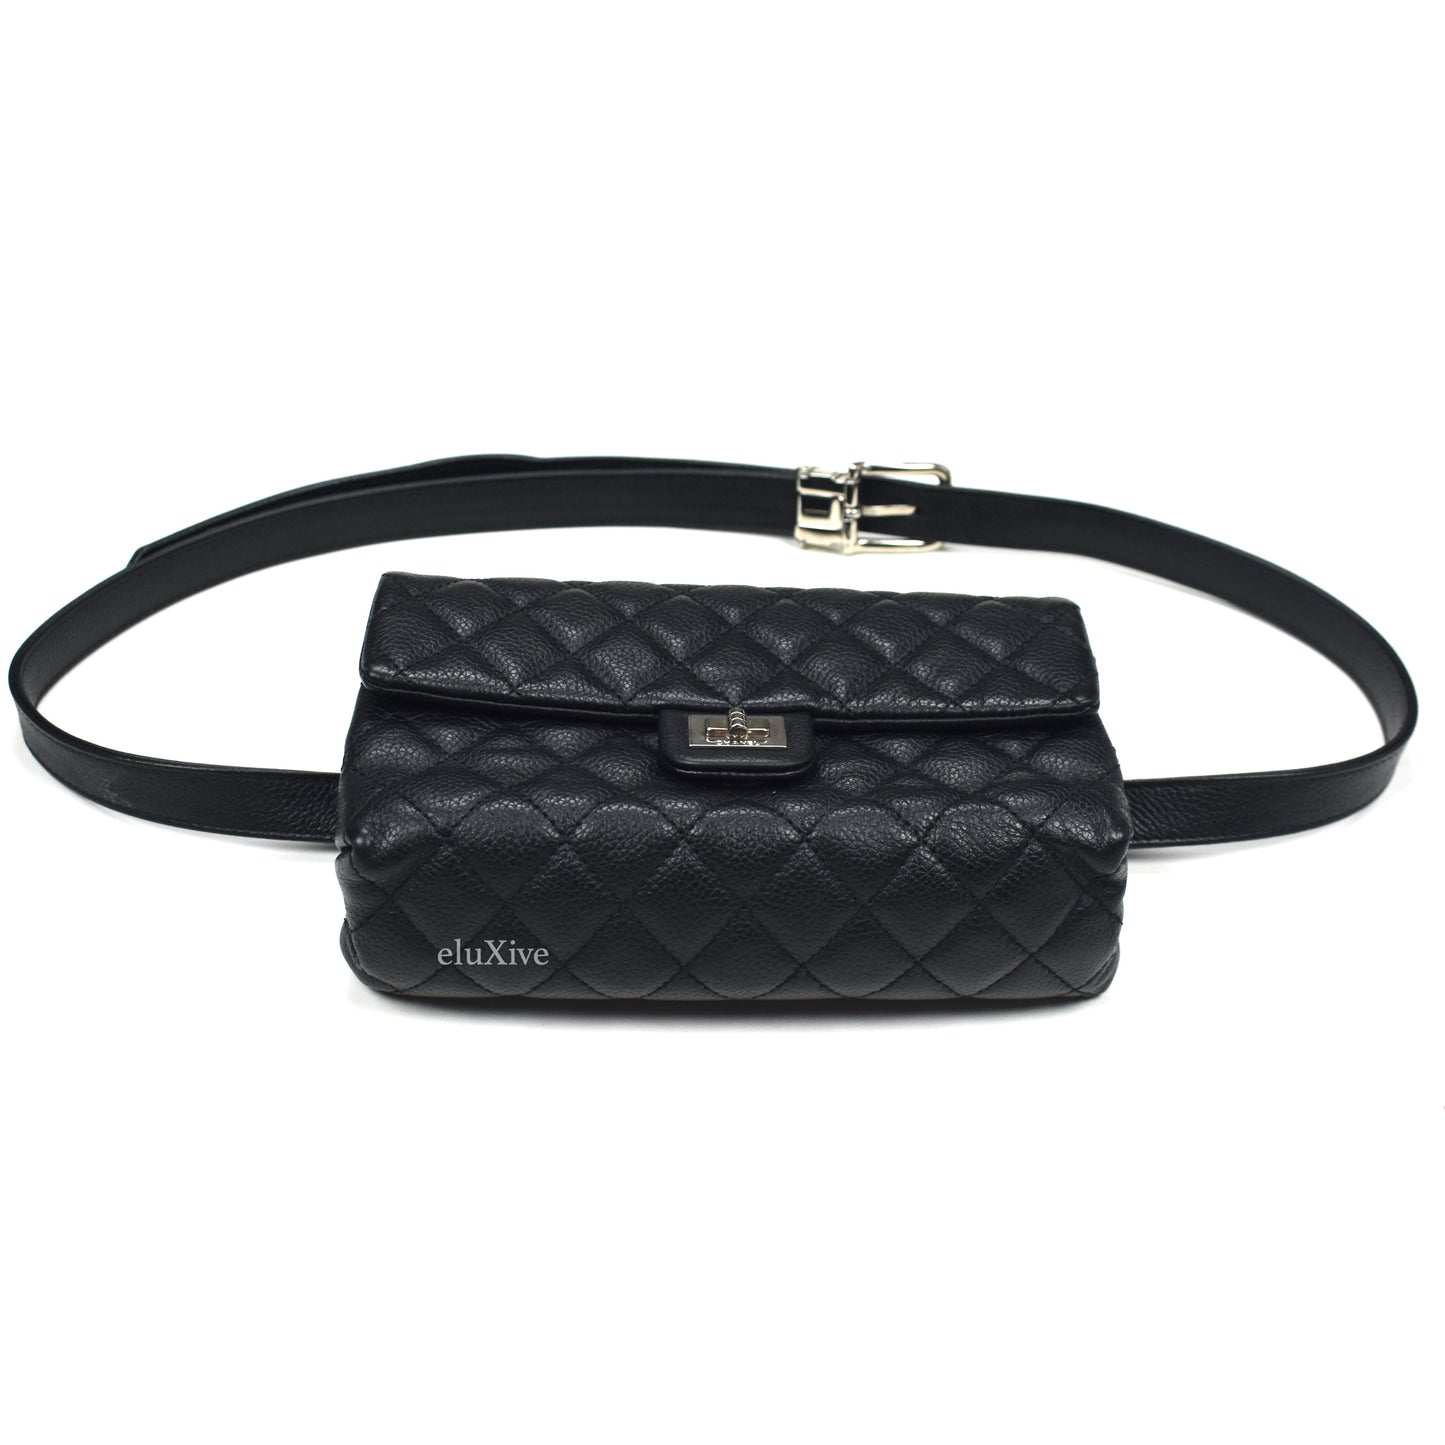 Chanel - Black Quilted Leather 2.55 Reissue Uniform Belt Bag